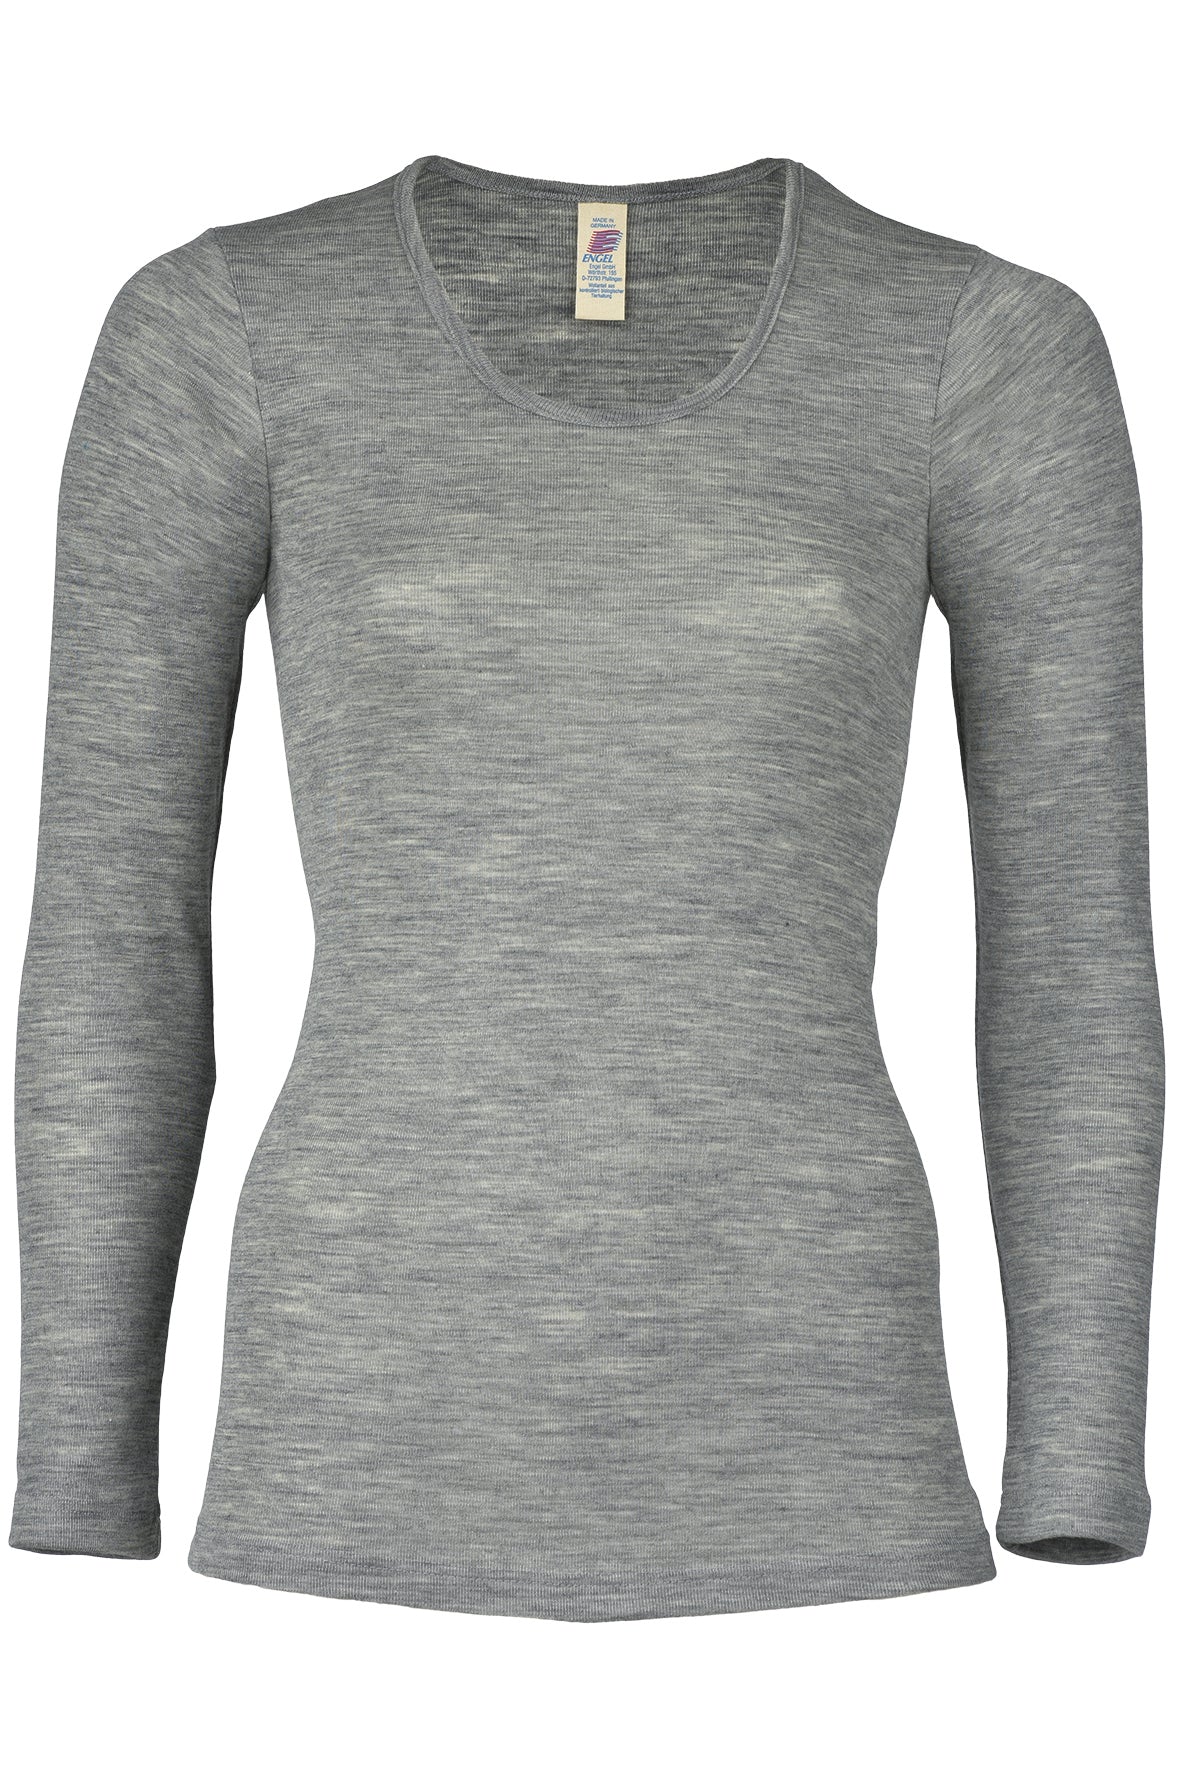 Women's 100% Merino Wool Base Layer Long Sleeve Crew Neck Shirt 190 GS